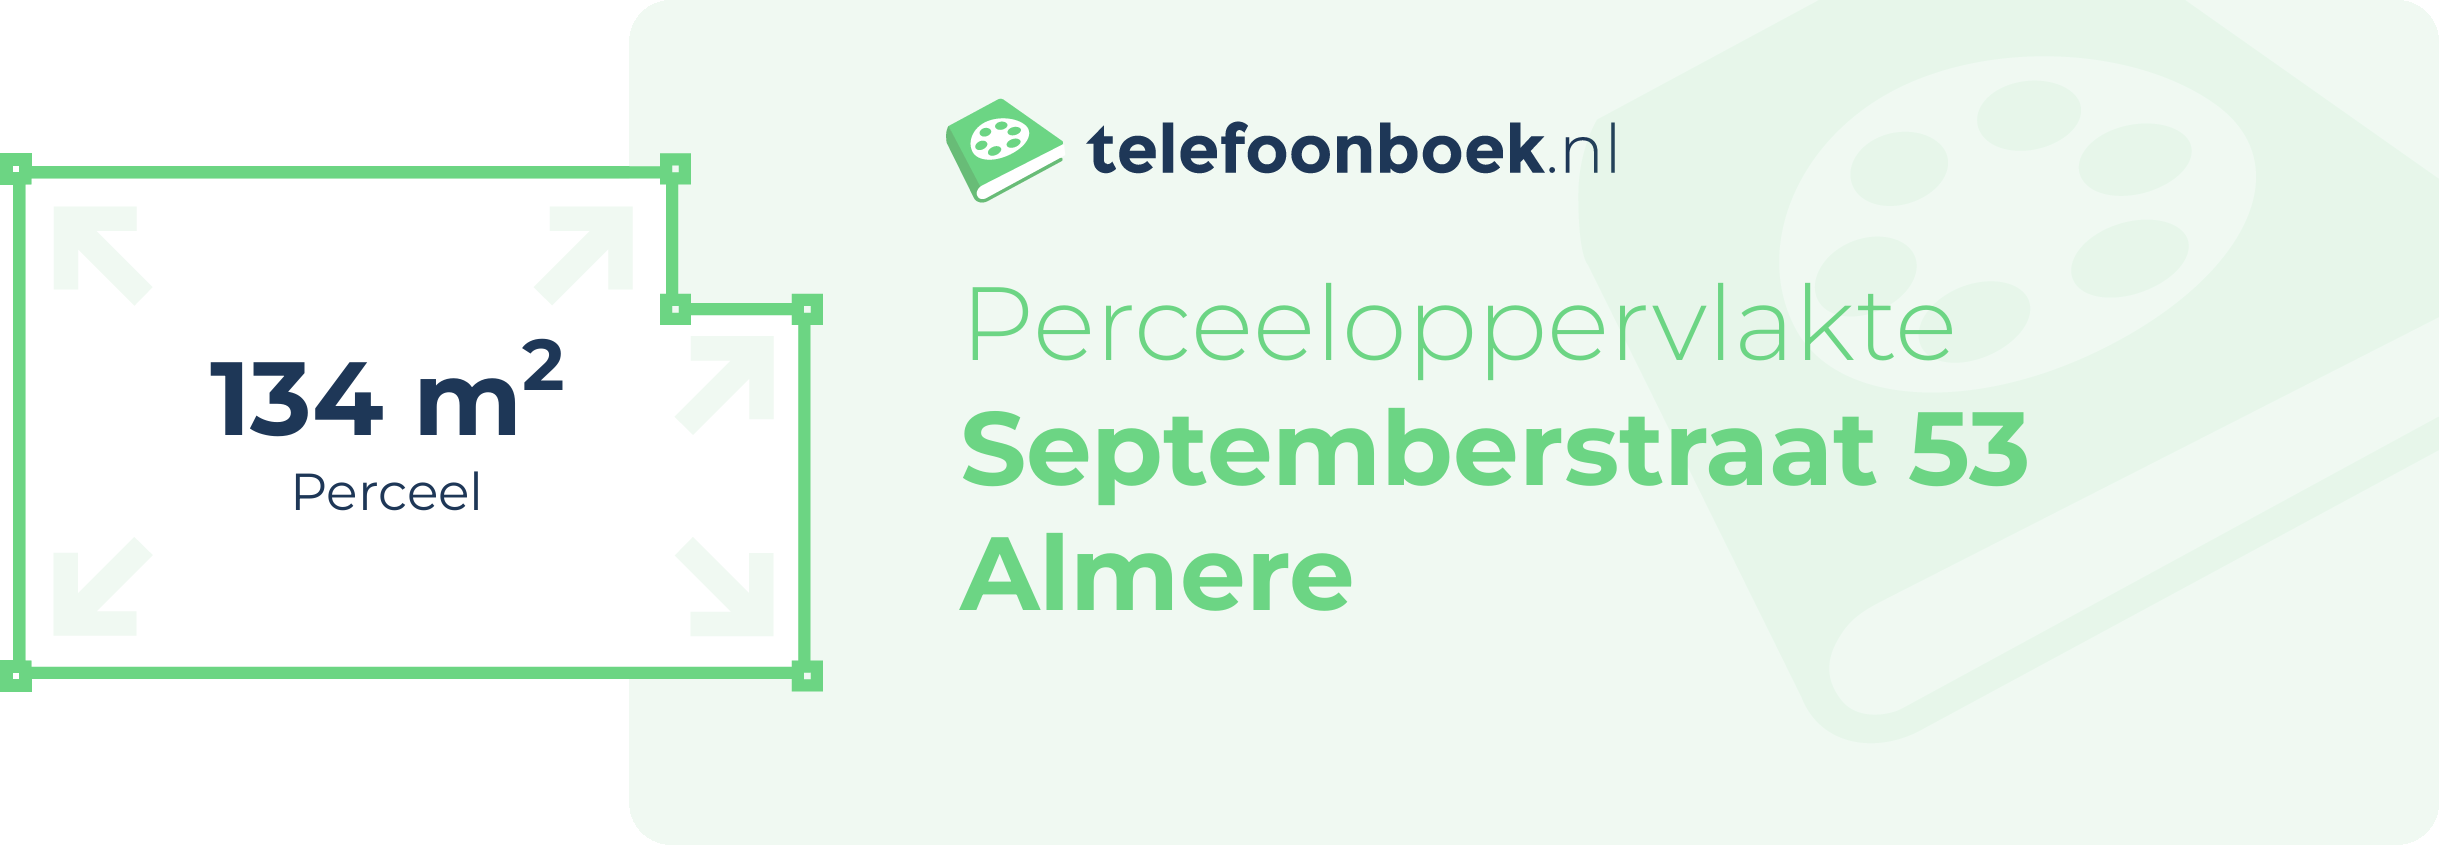 Perceeloppervlakte Septemberstraat 53 Almere